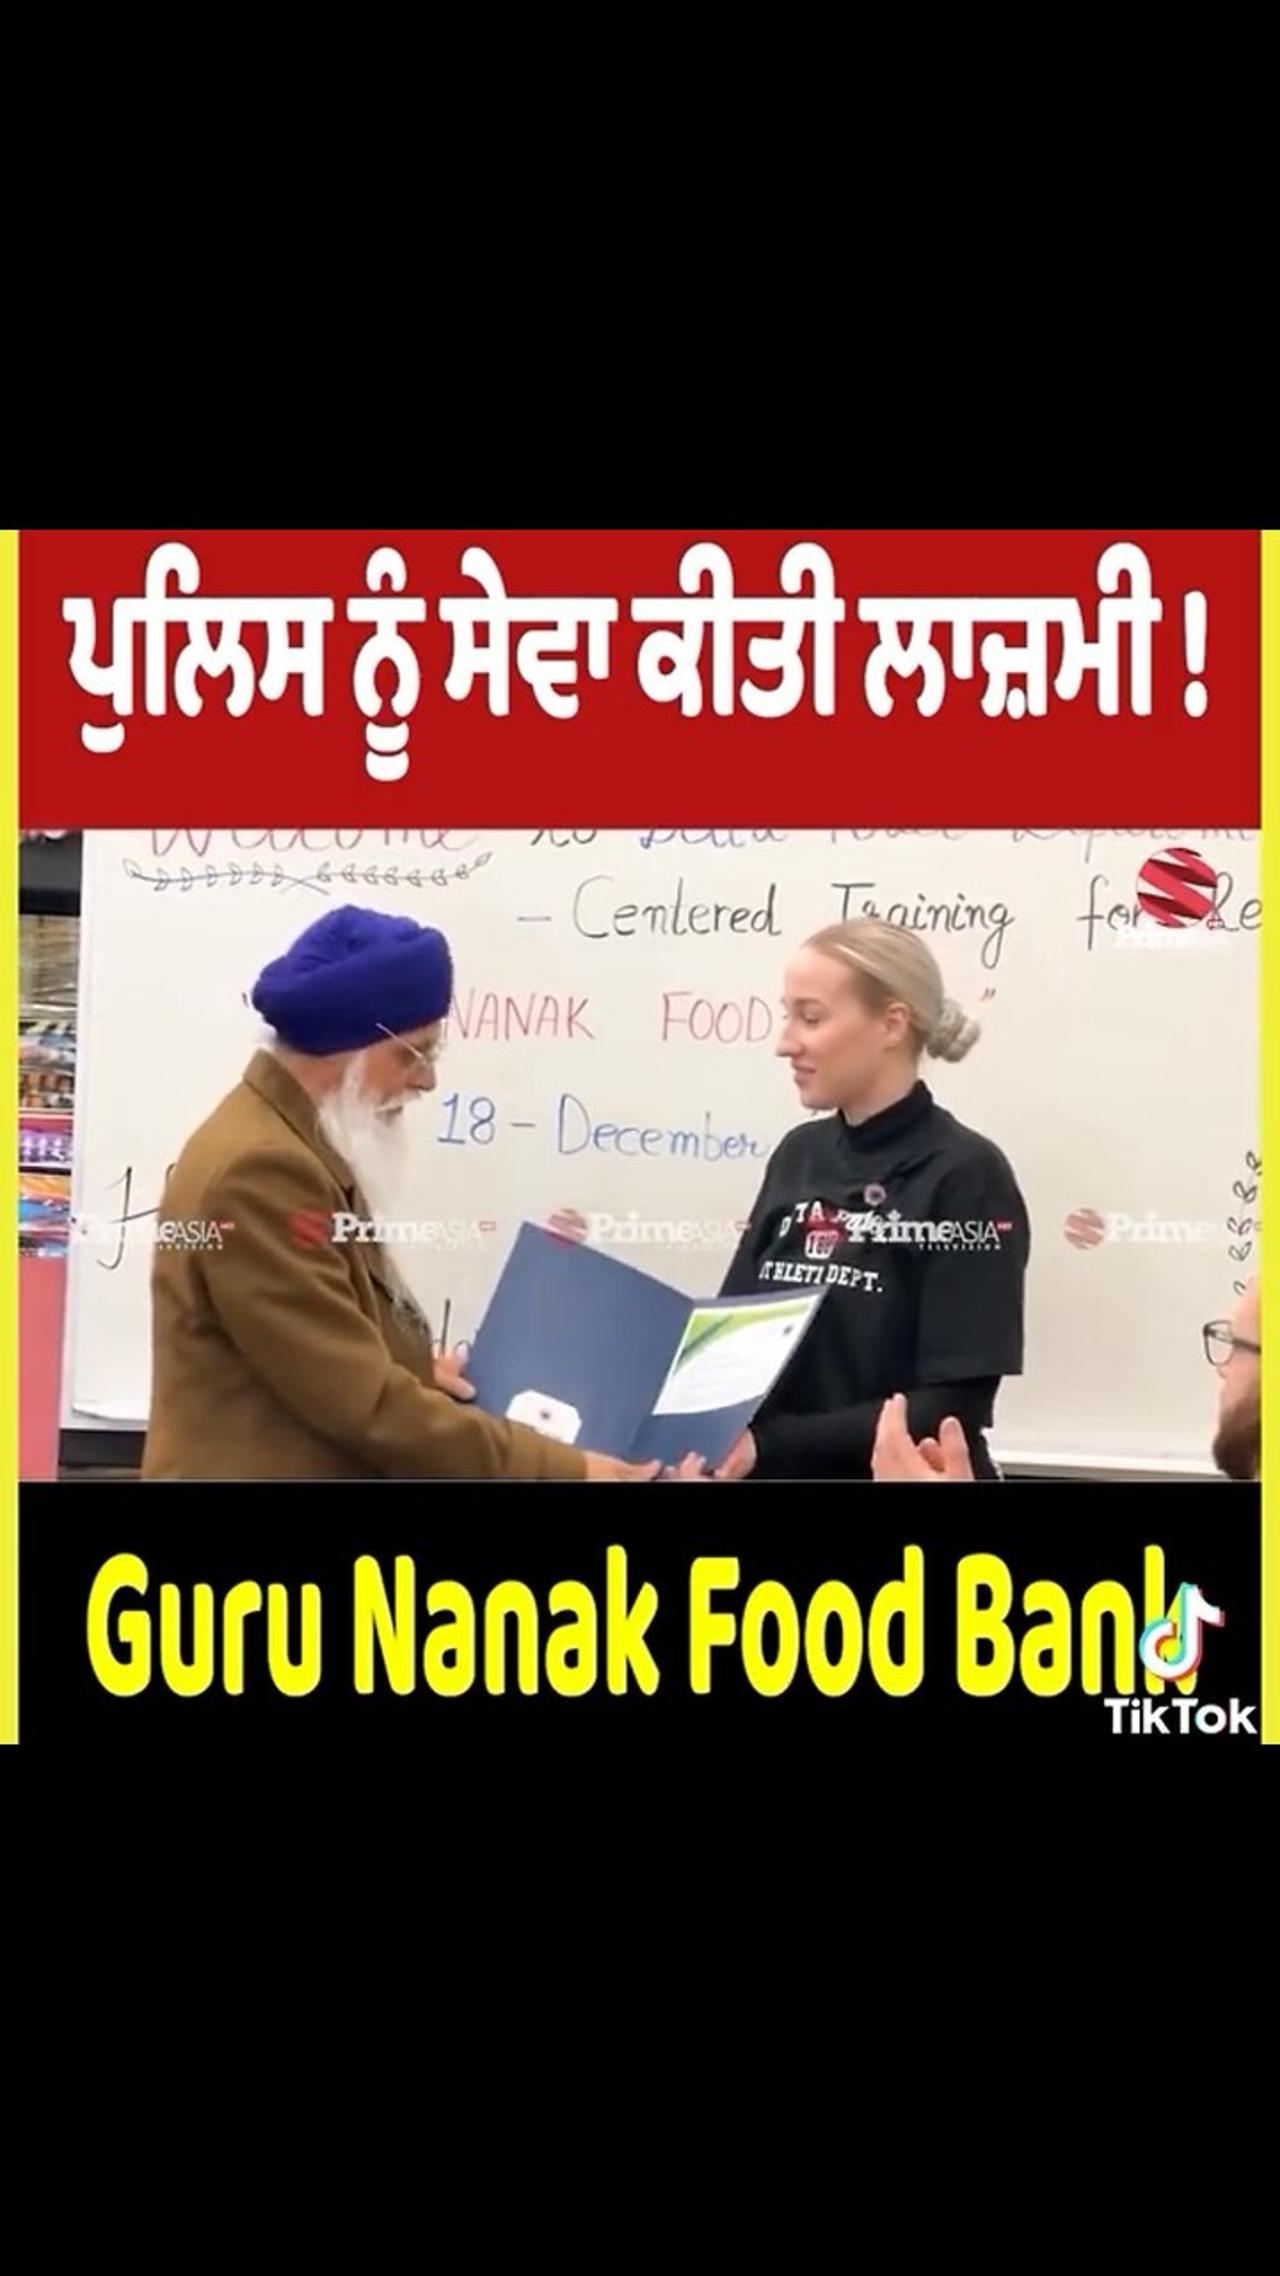 Canada is mandatory to serve 4 days in Guru Nanak Food Bank